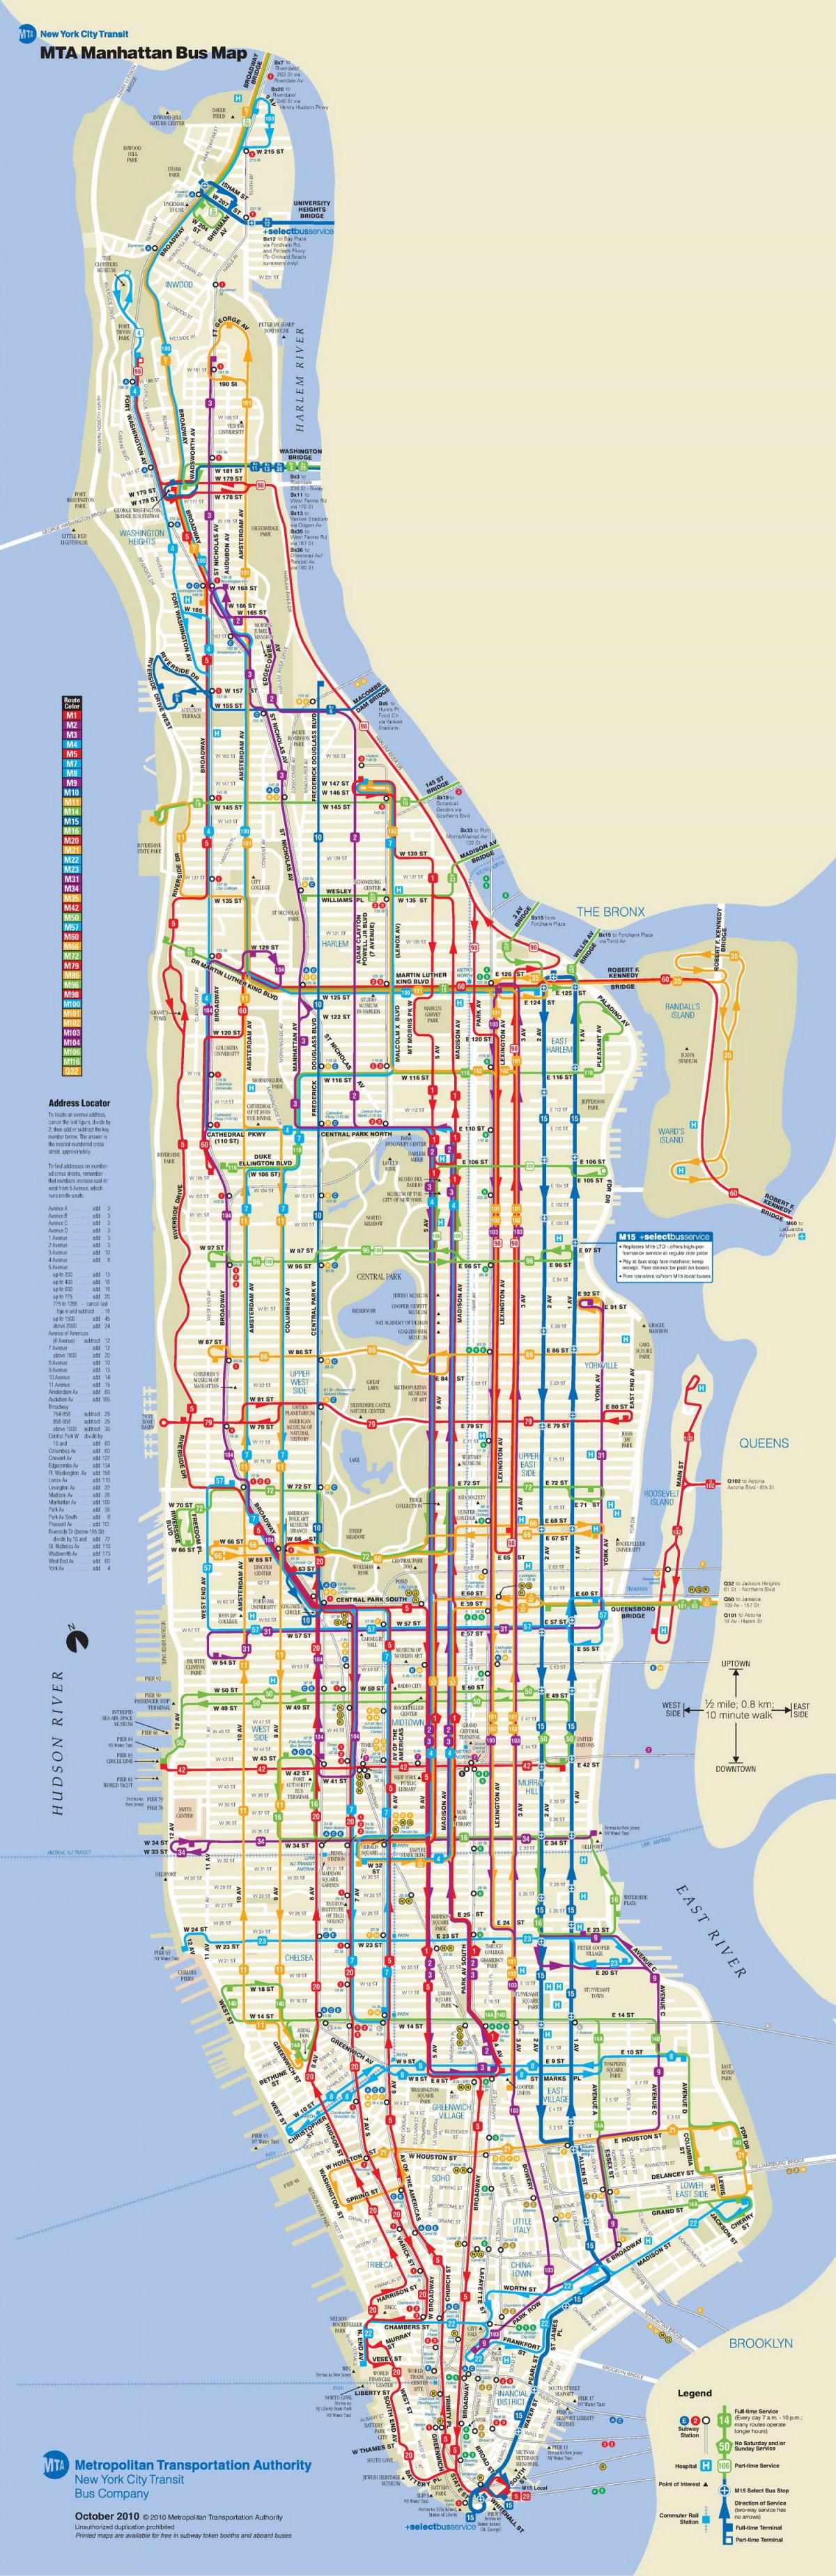 Manhattan bus kaart met stop